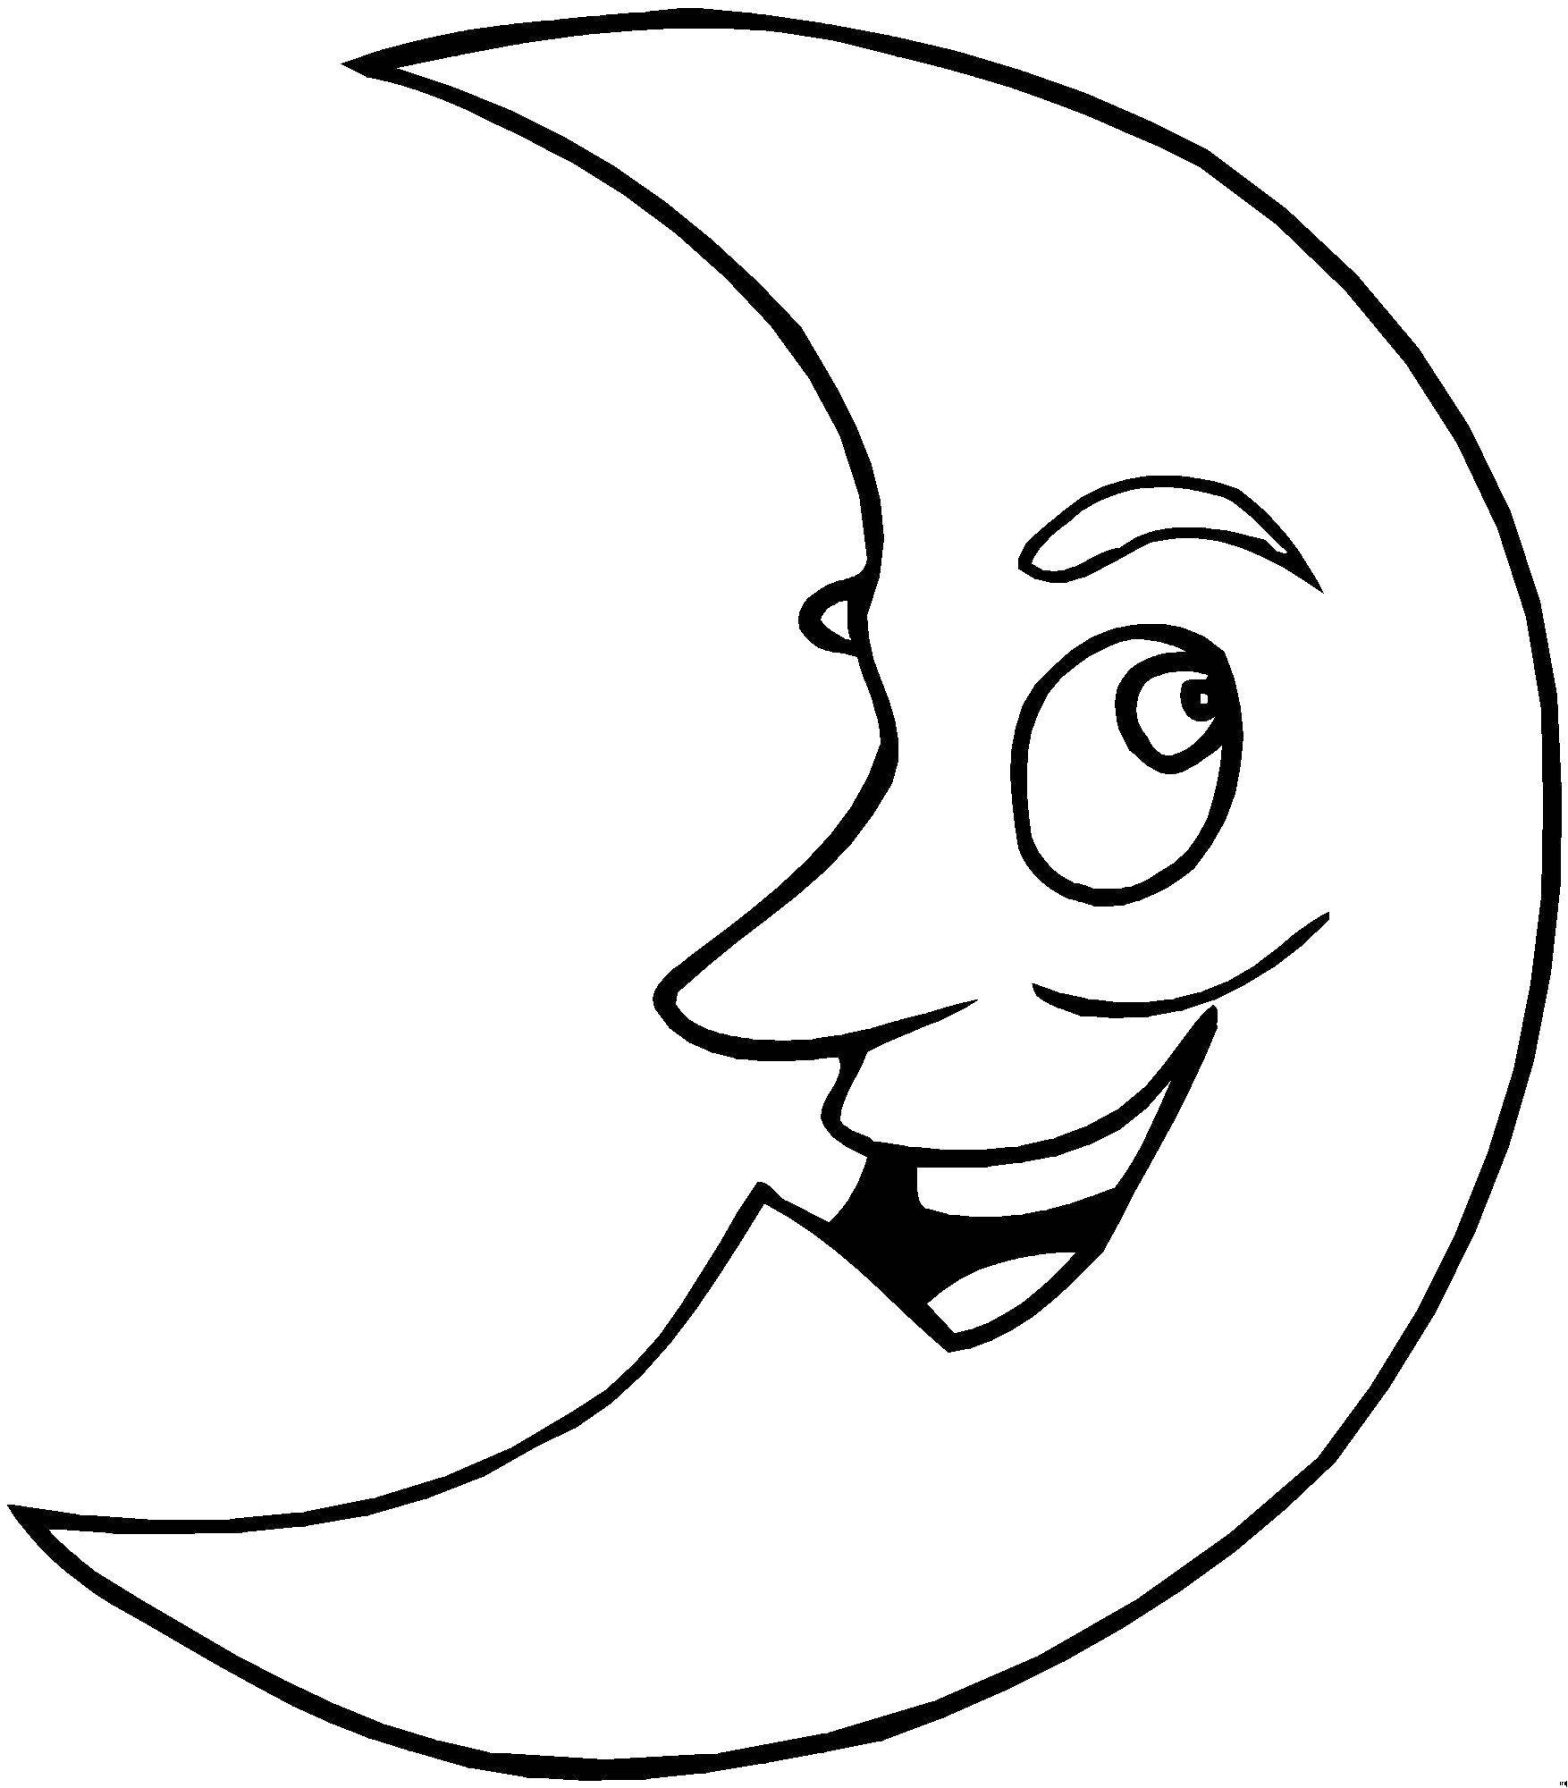 Раскраска луны улыбка и месяц для малышей на тему природы (луна, улыбка, месяц, выбор, темы)